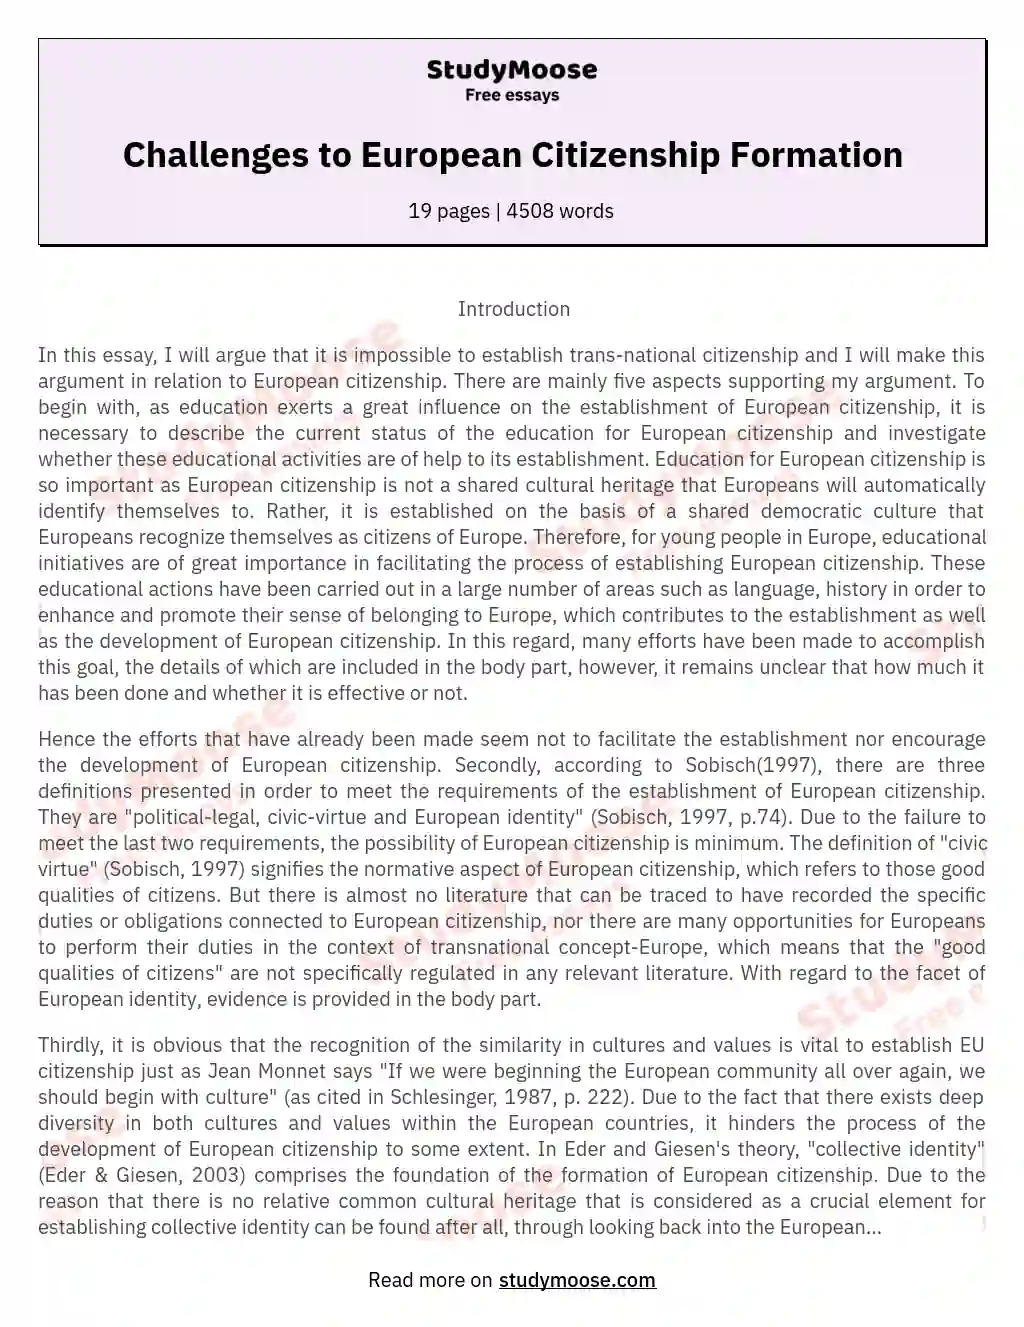 Challenges to European Citizenship Formation essay